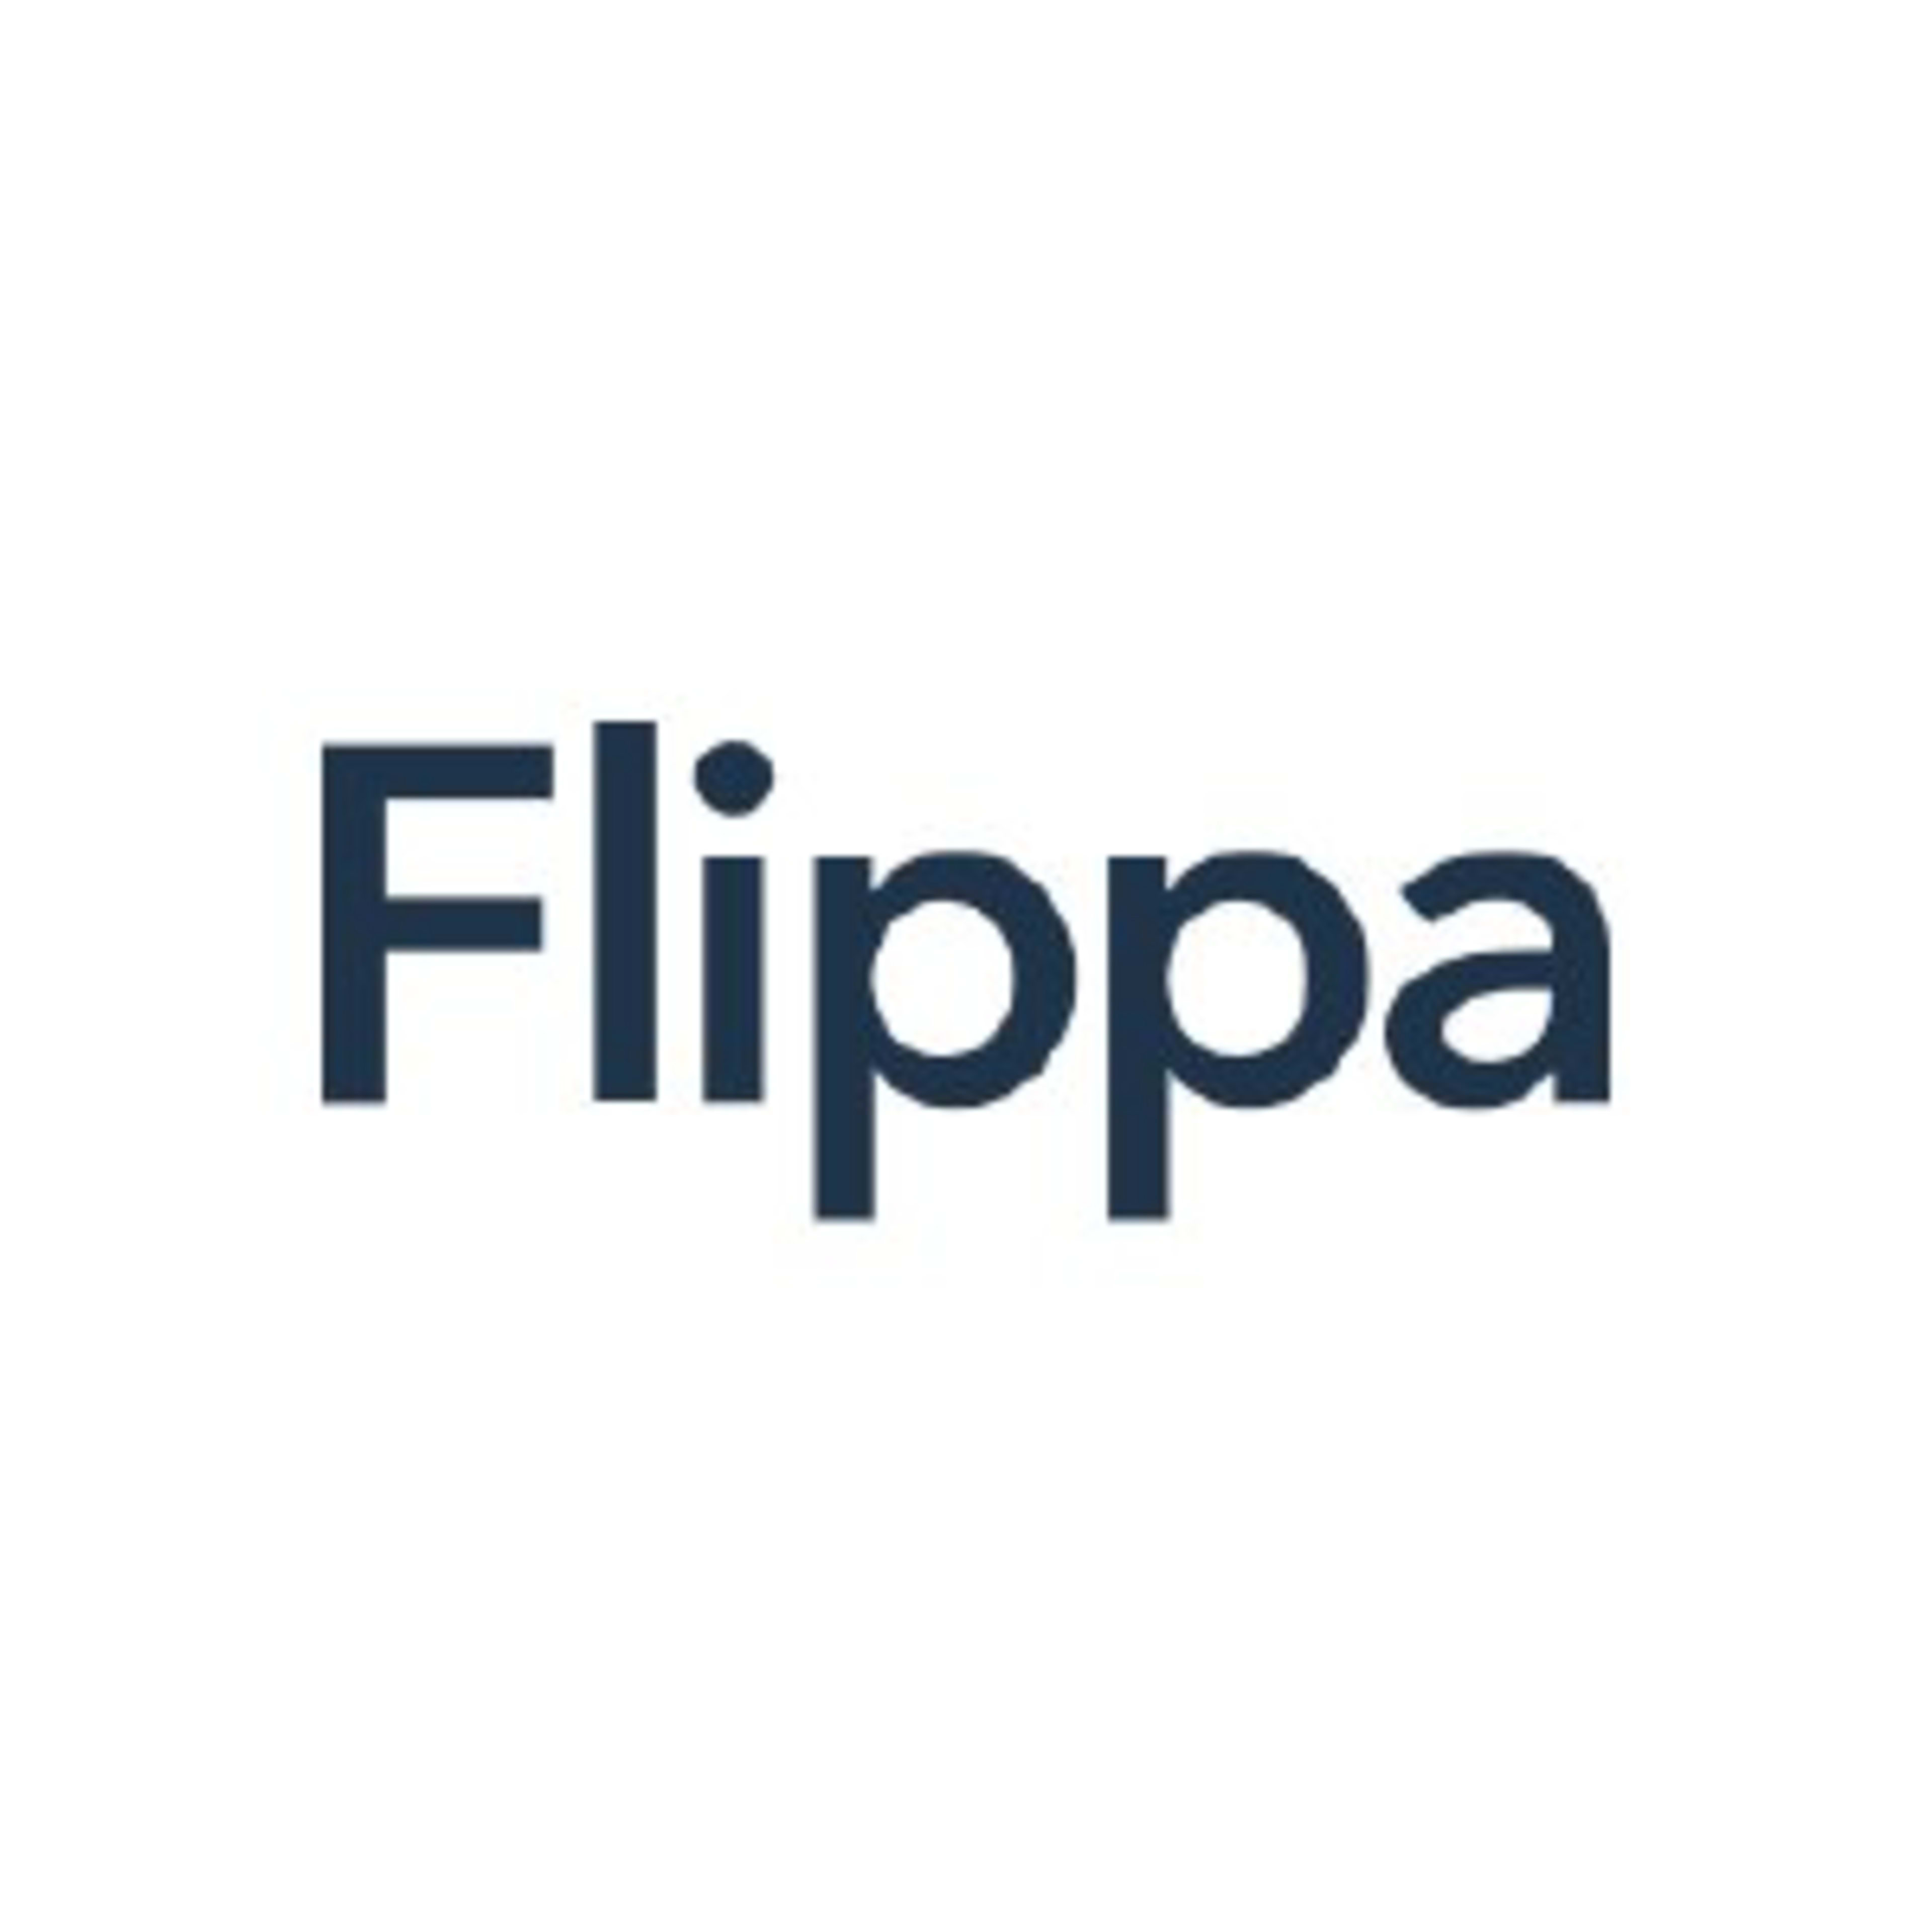 FlippaCode